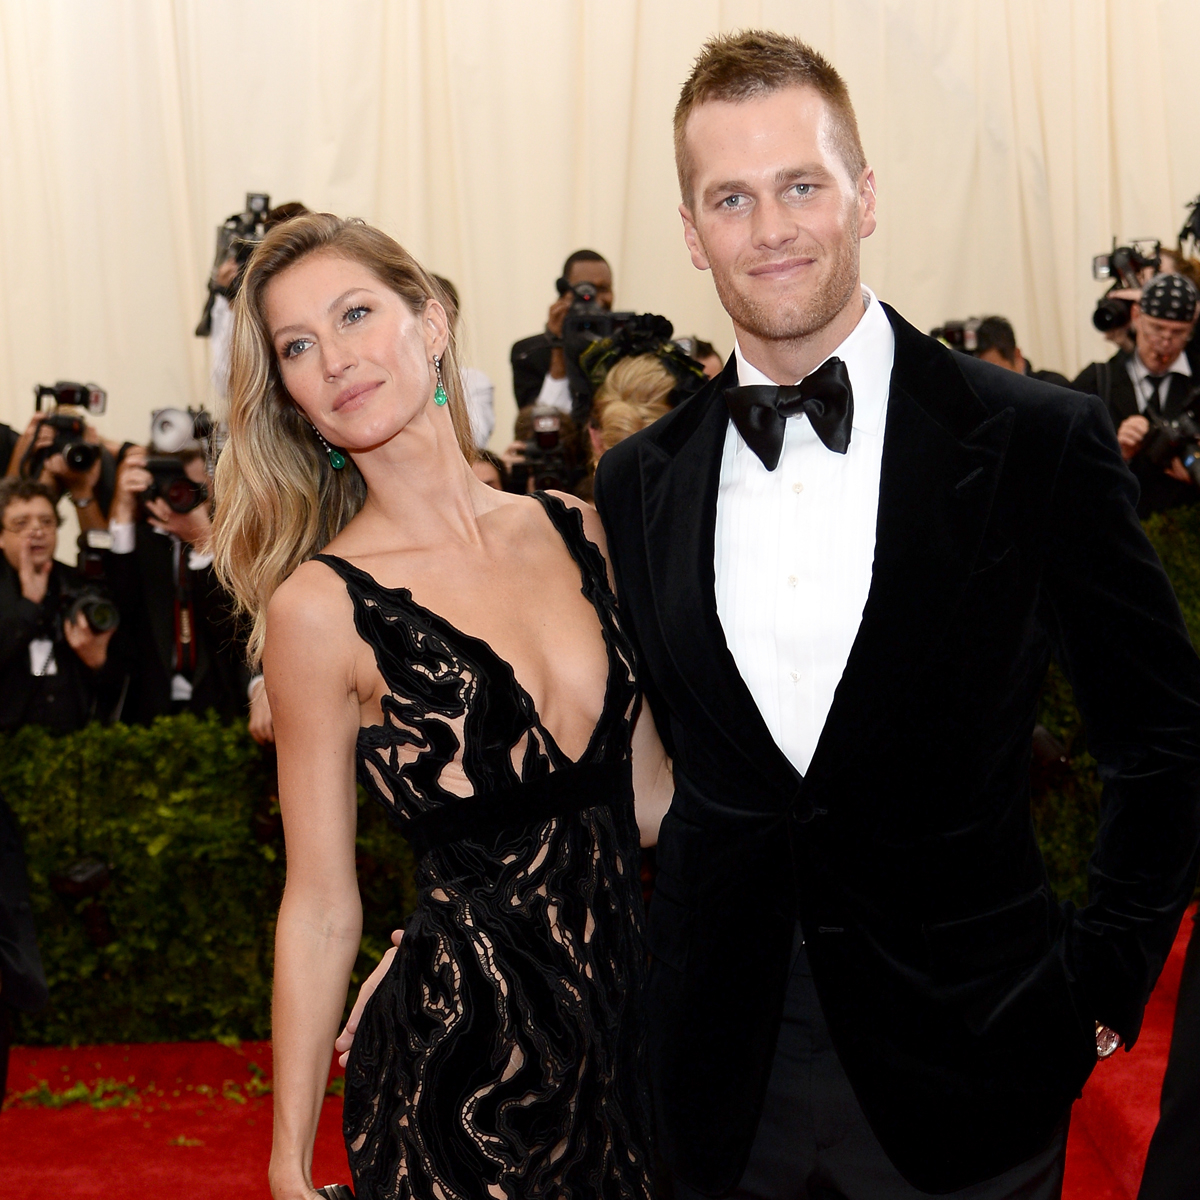 Why Gisele Bündchen is “Grateful” for Tom Brady Despite Divorce